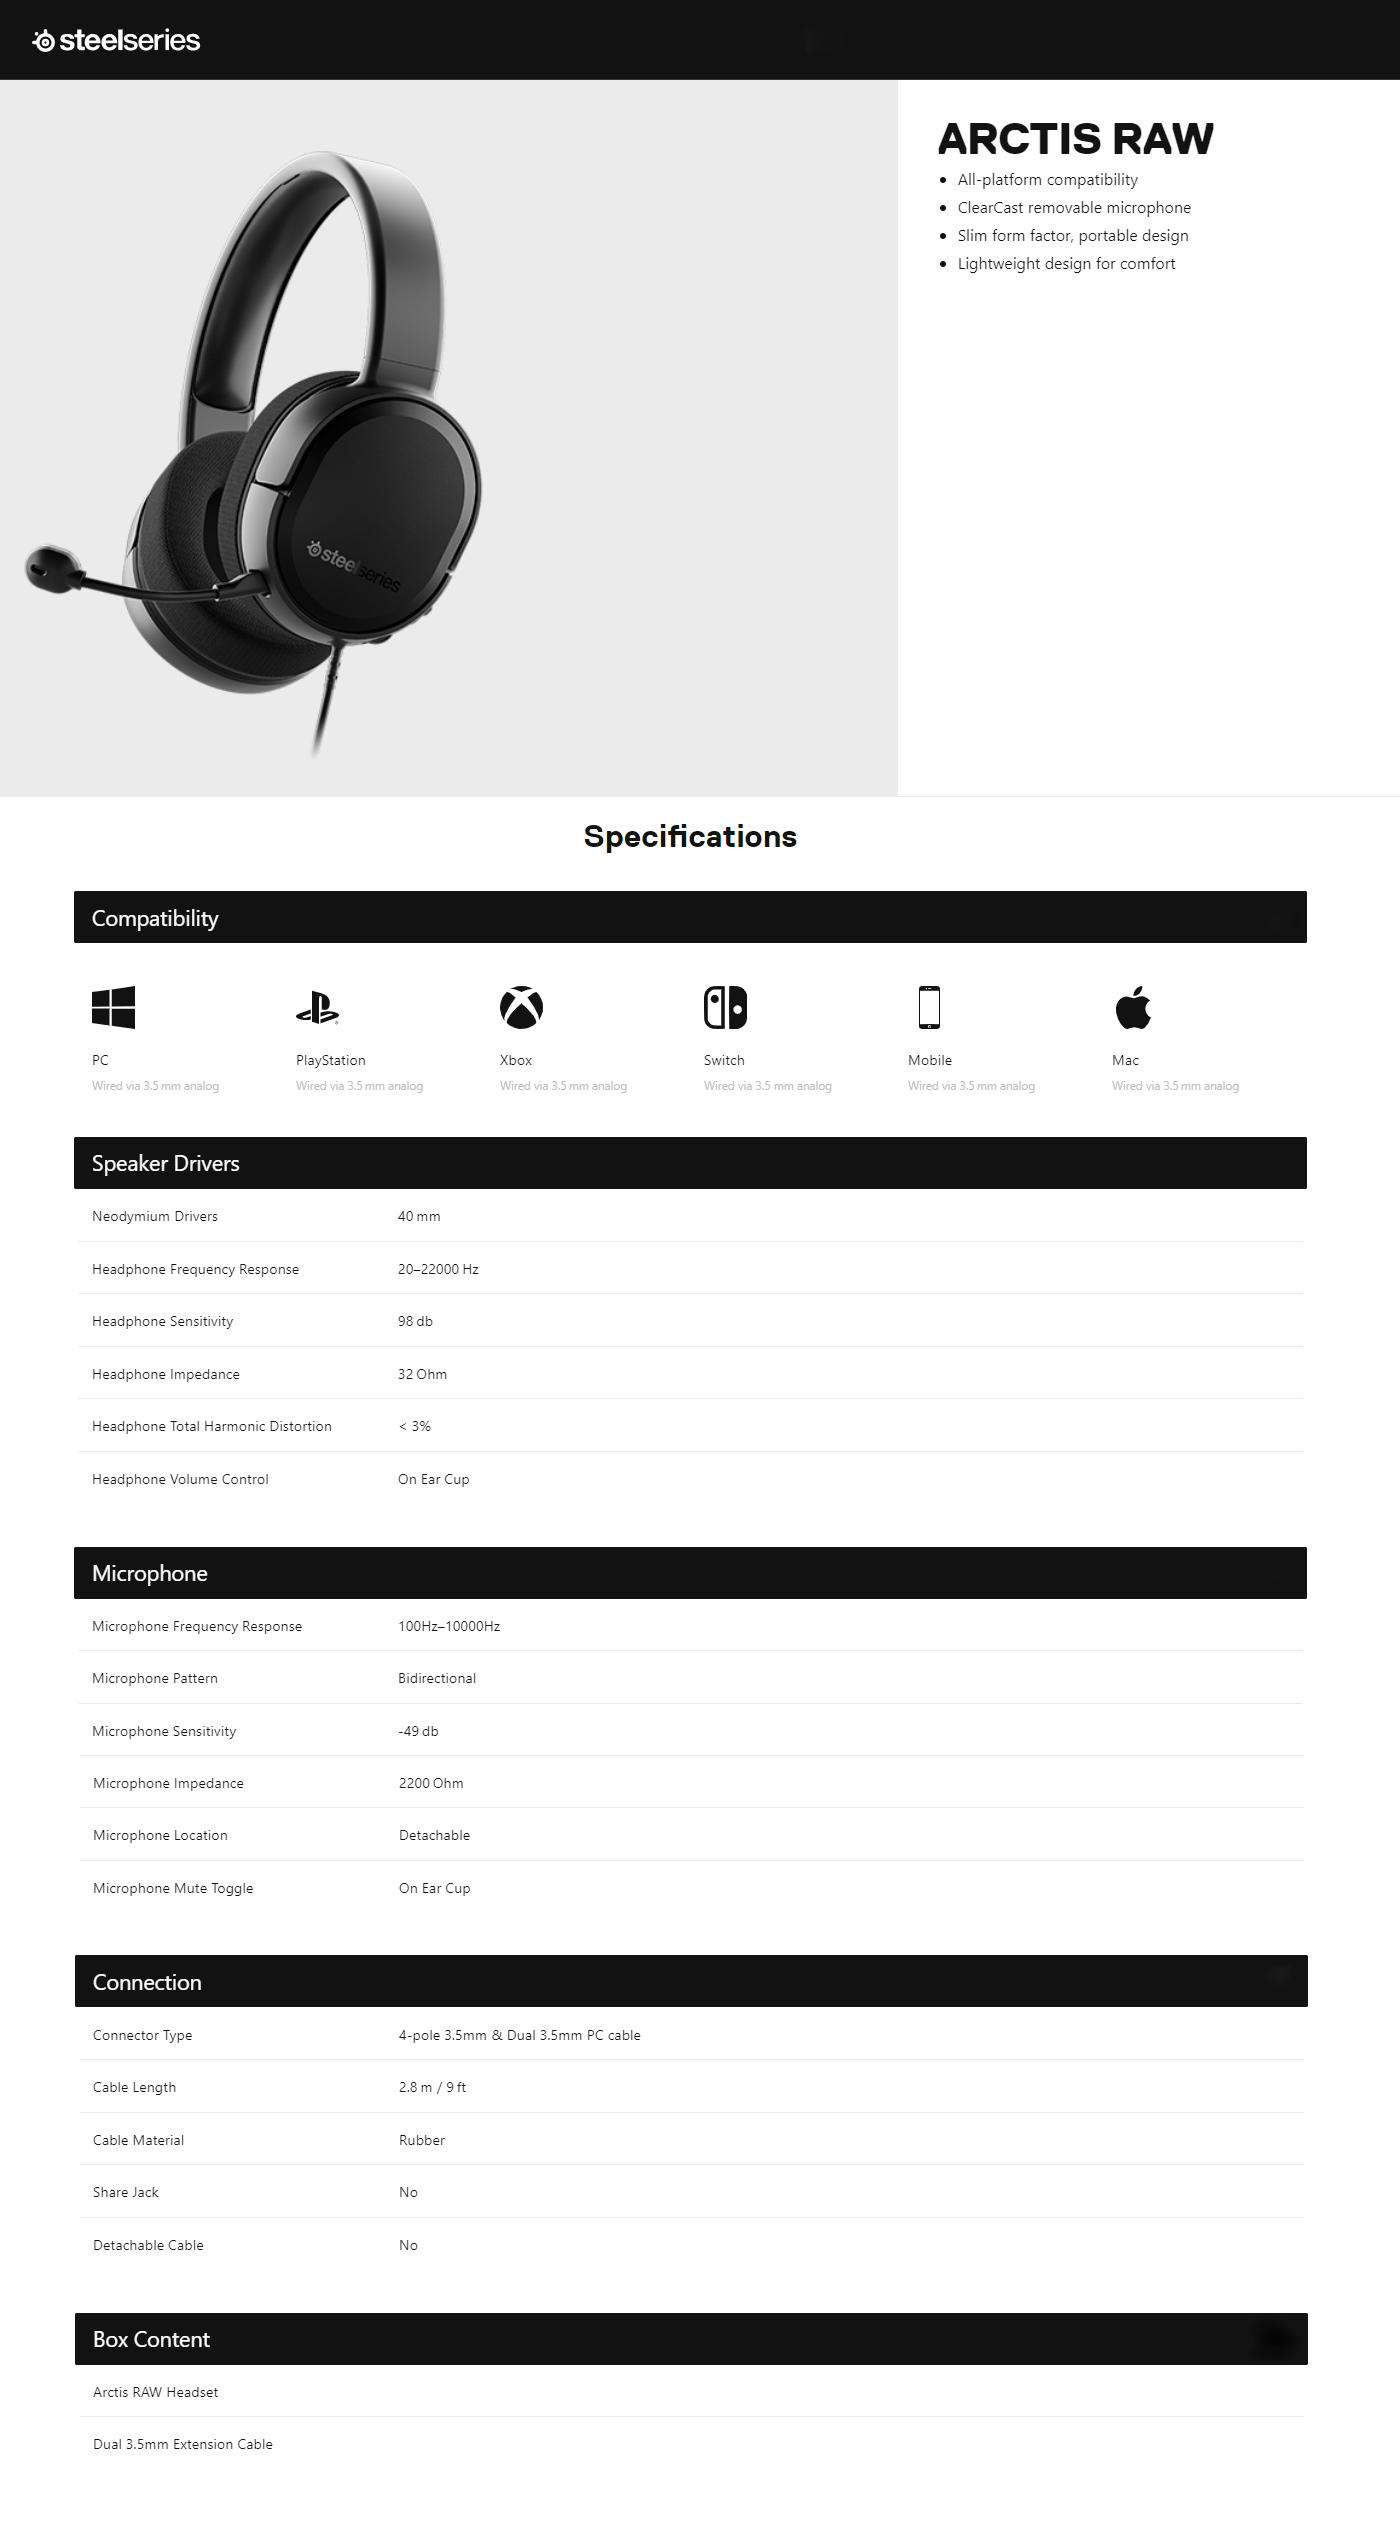  Buy Online Steelseries Arctis Raw Gaming Headset - Black - 2019 Edition (61496)